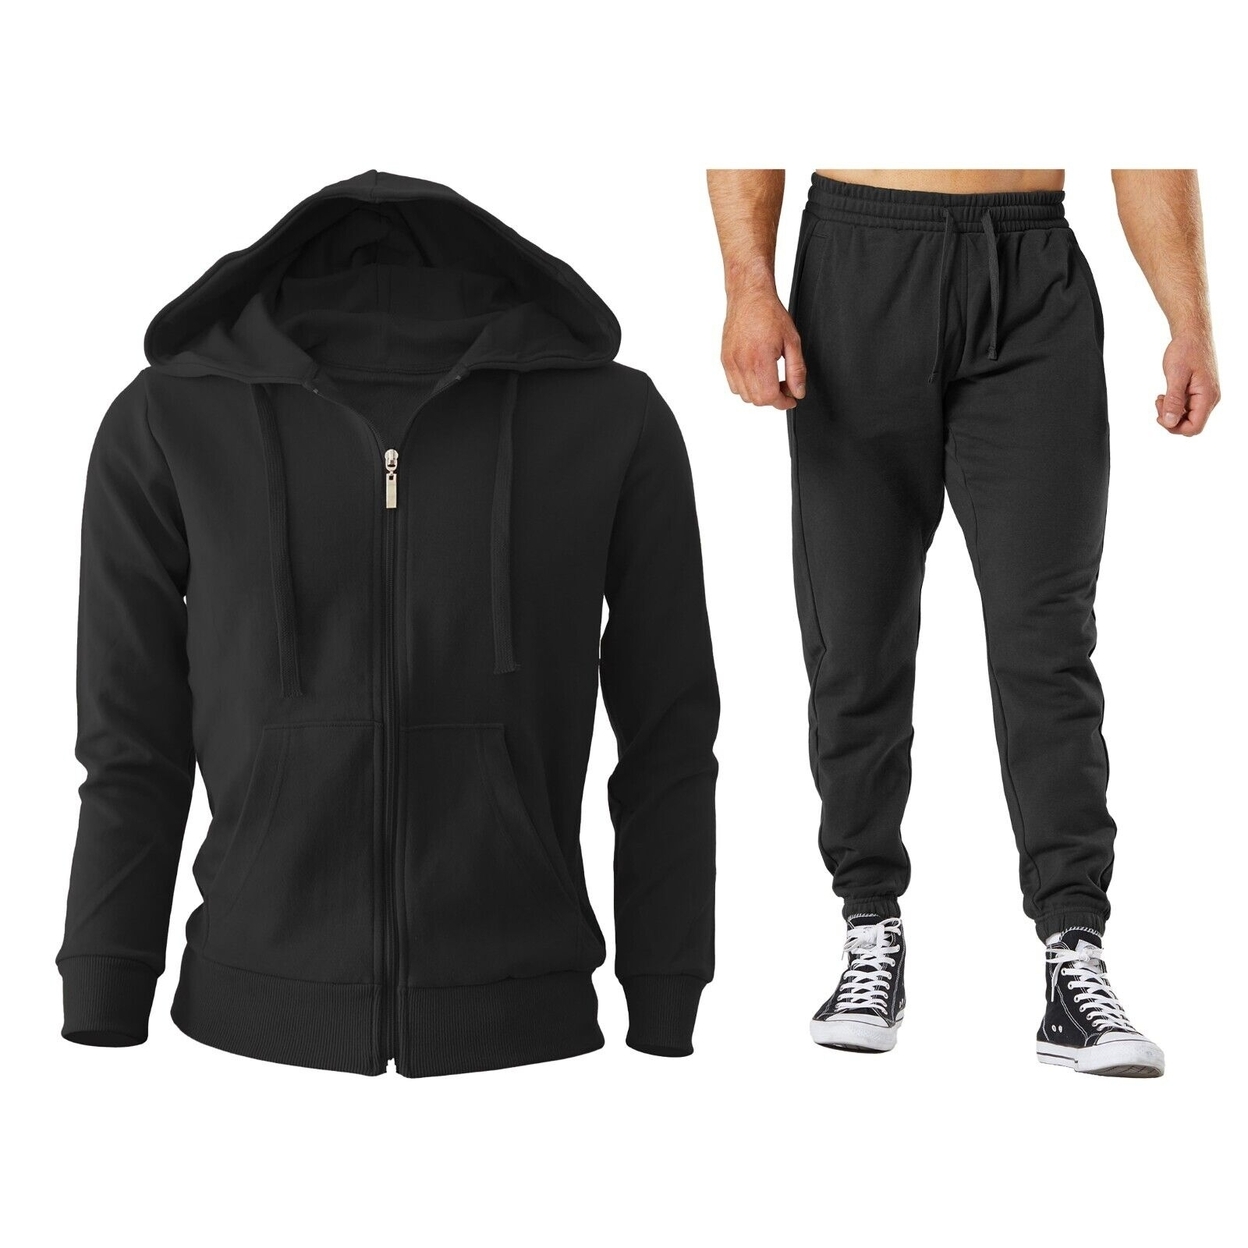 4-Piece: Men's Winter Warm Cozy Athletic Multi-Pockets BIG & TALL Sweatsuit Set - Black, Large